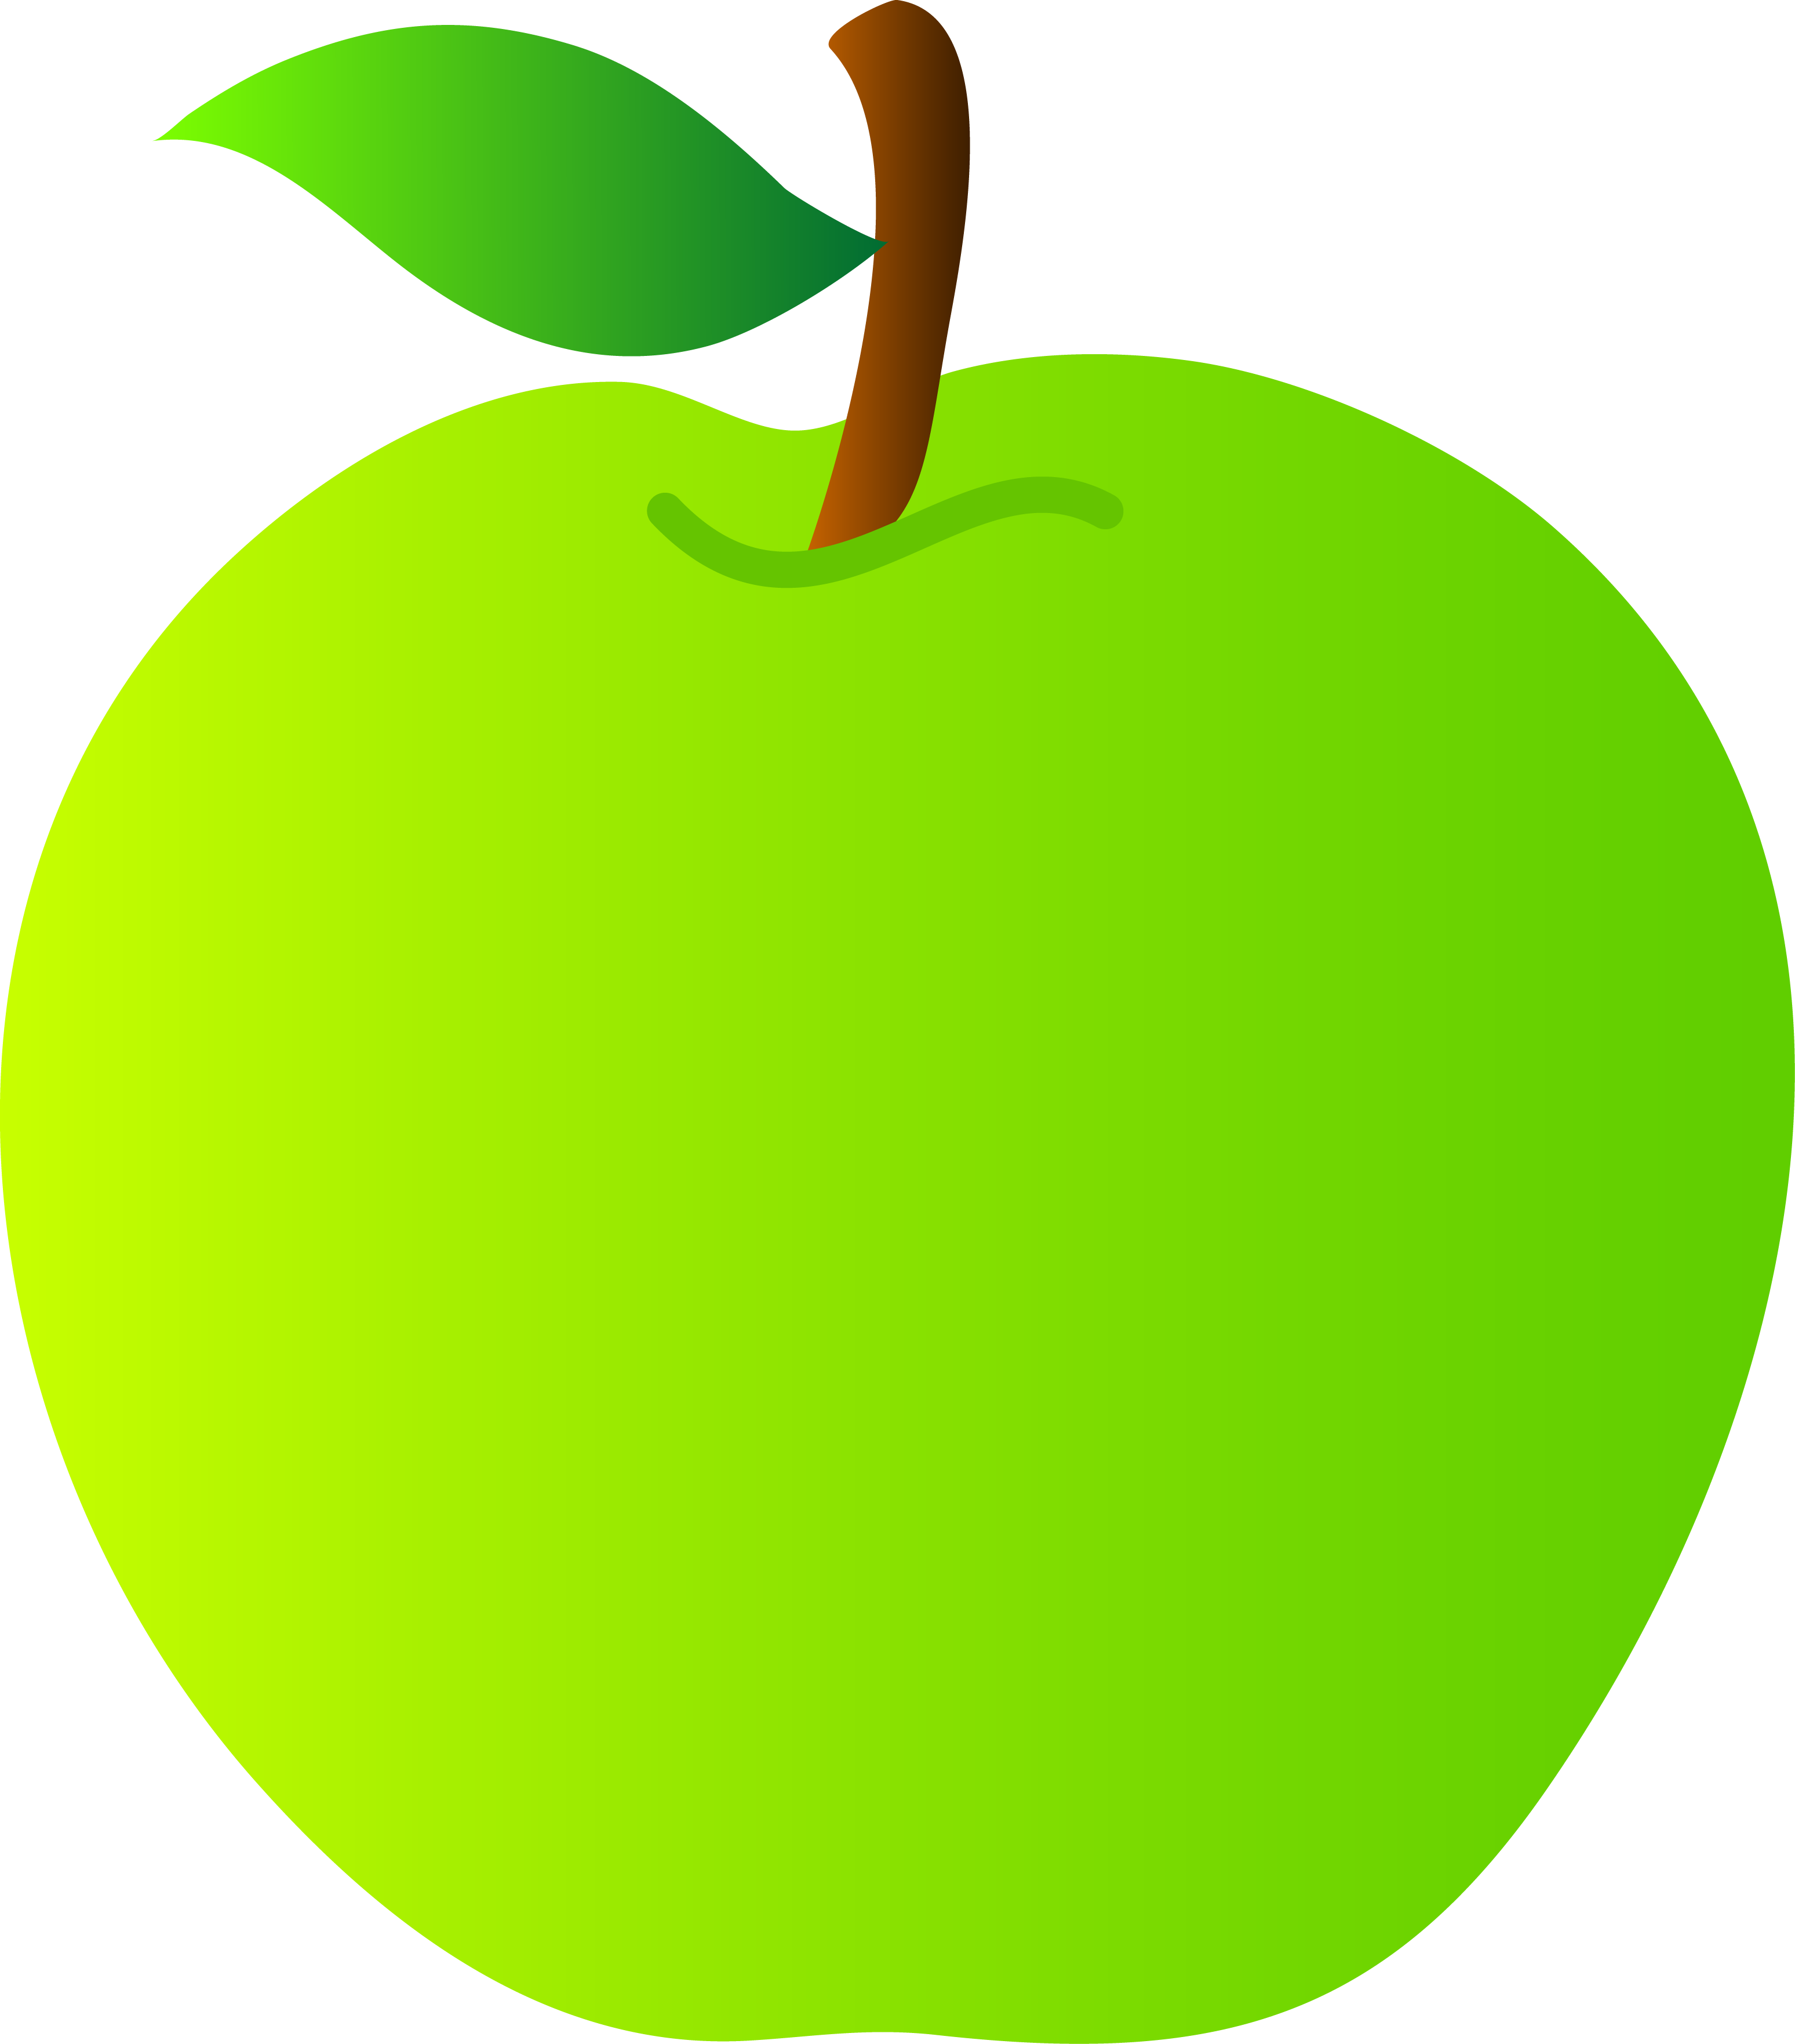 Clip Art Of Apples